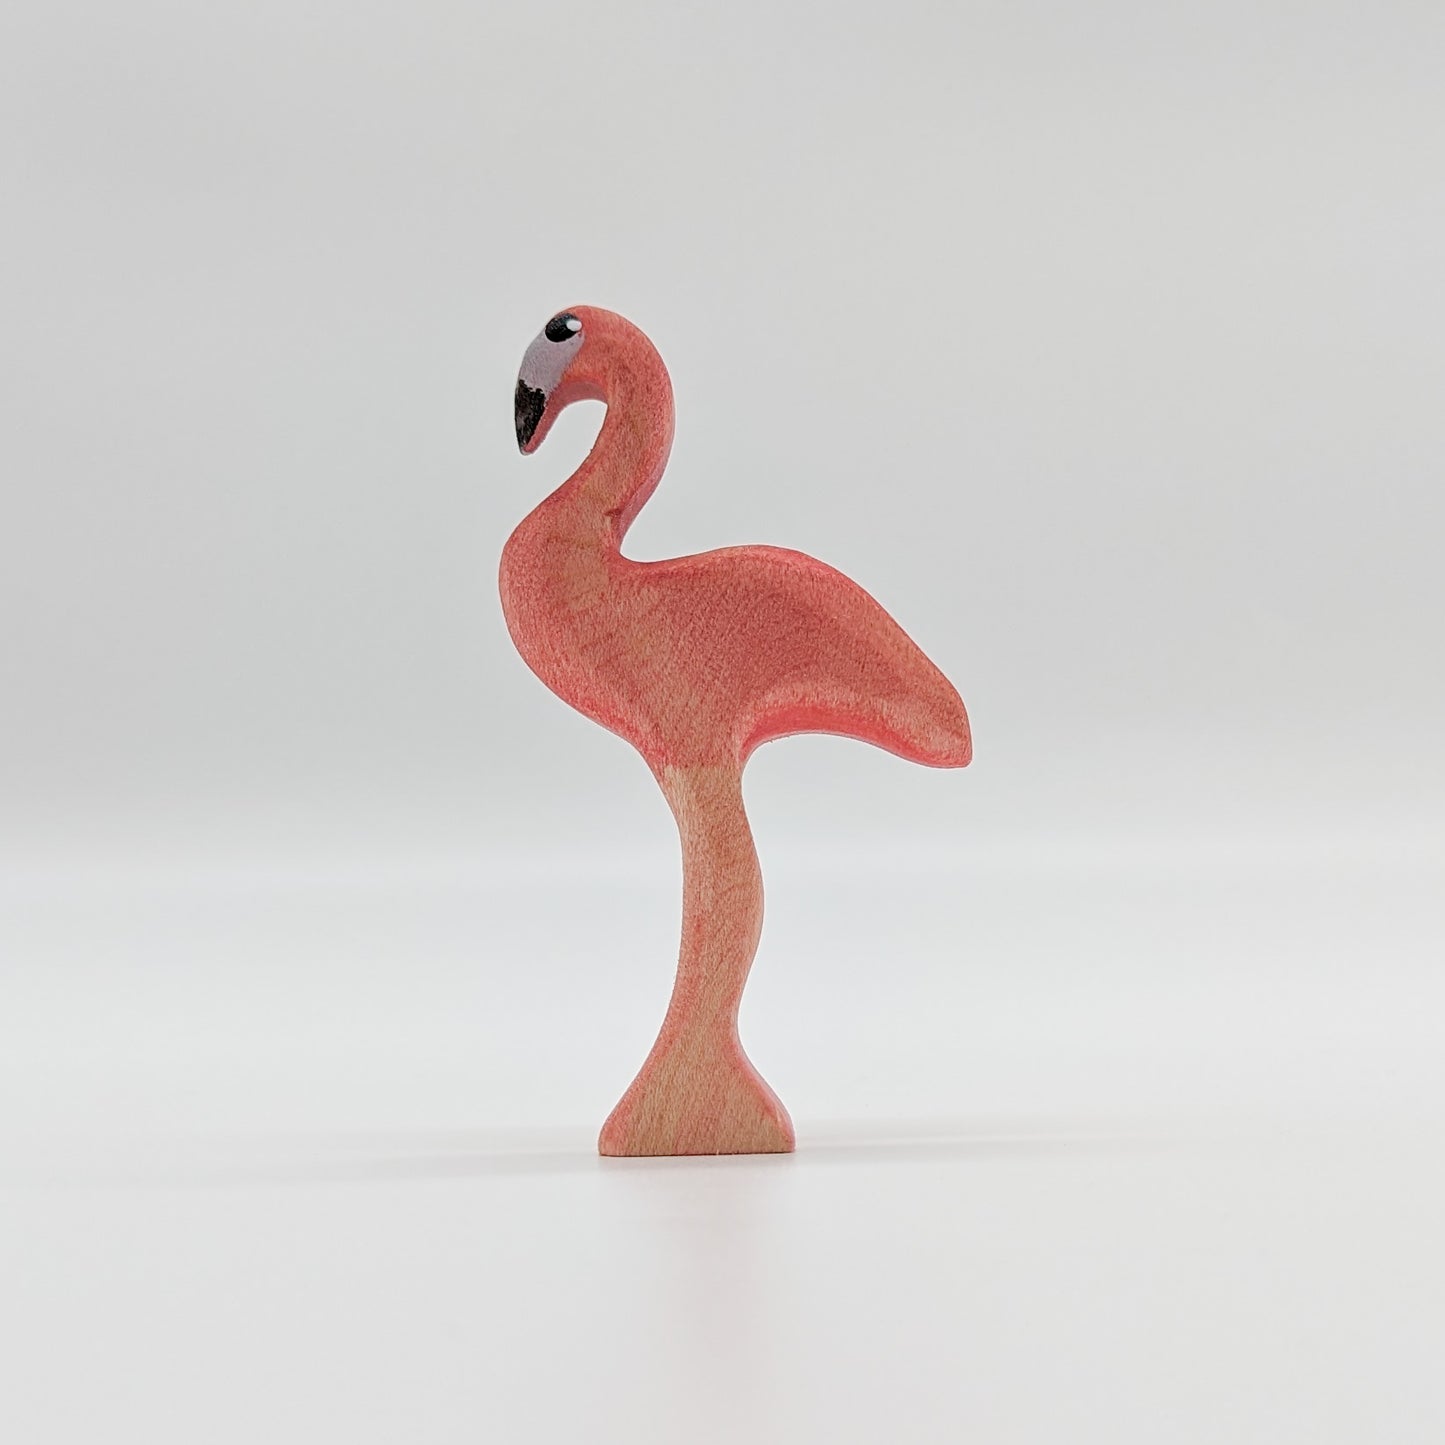 Flamingo Set